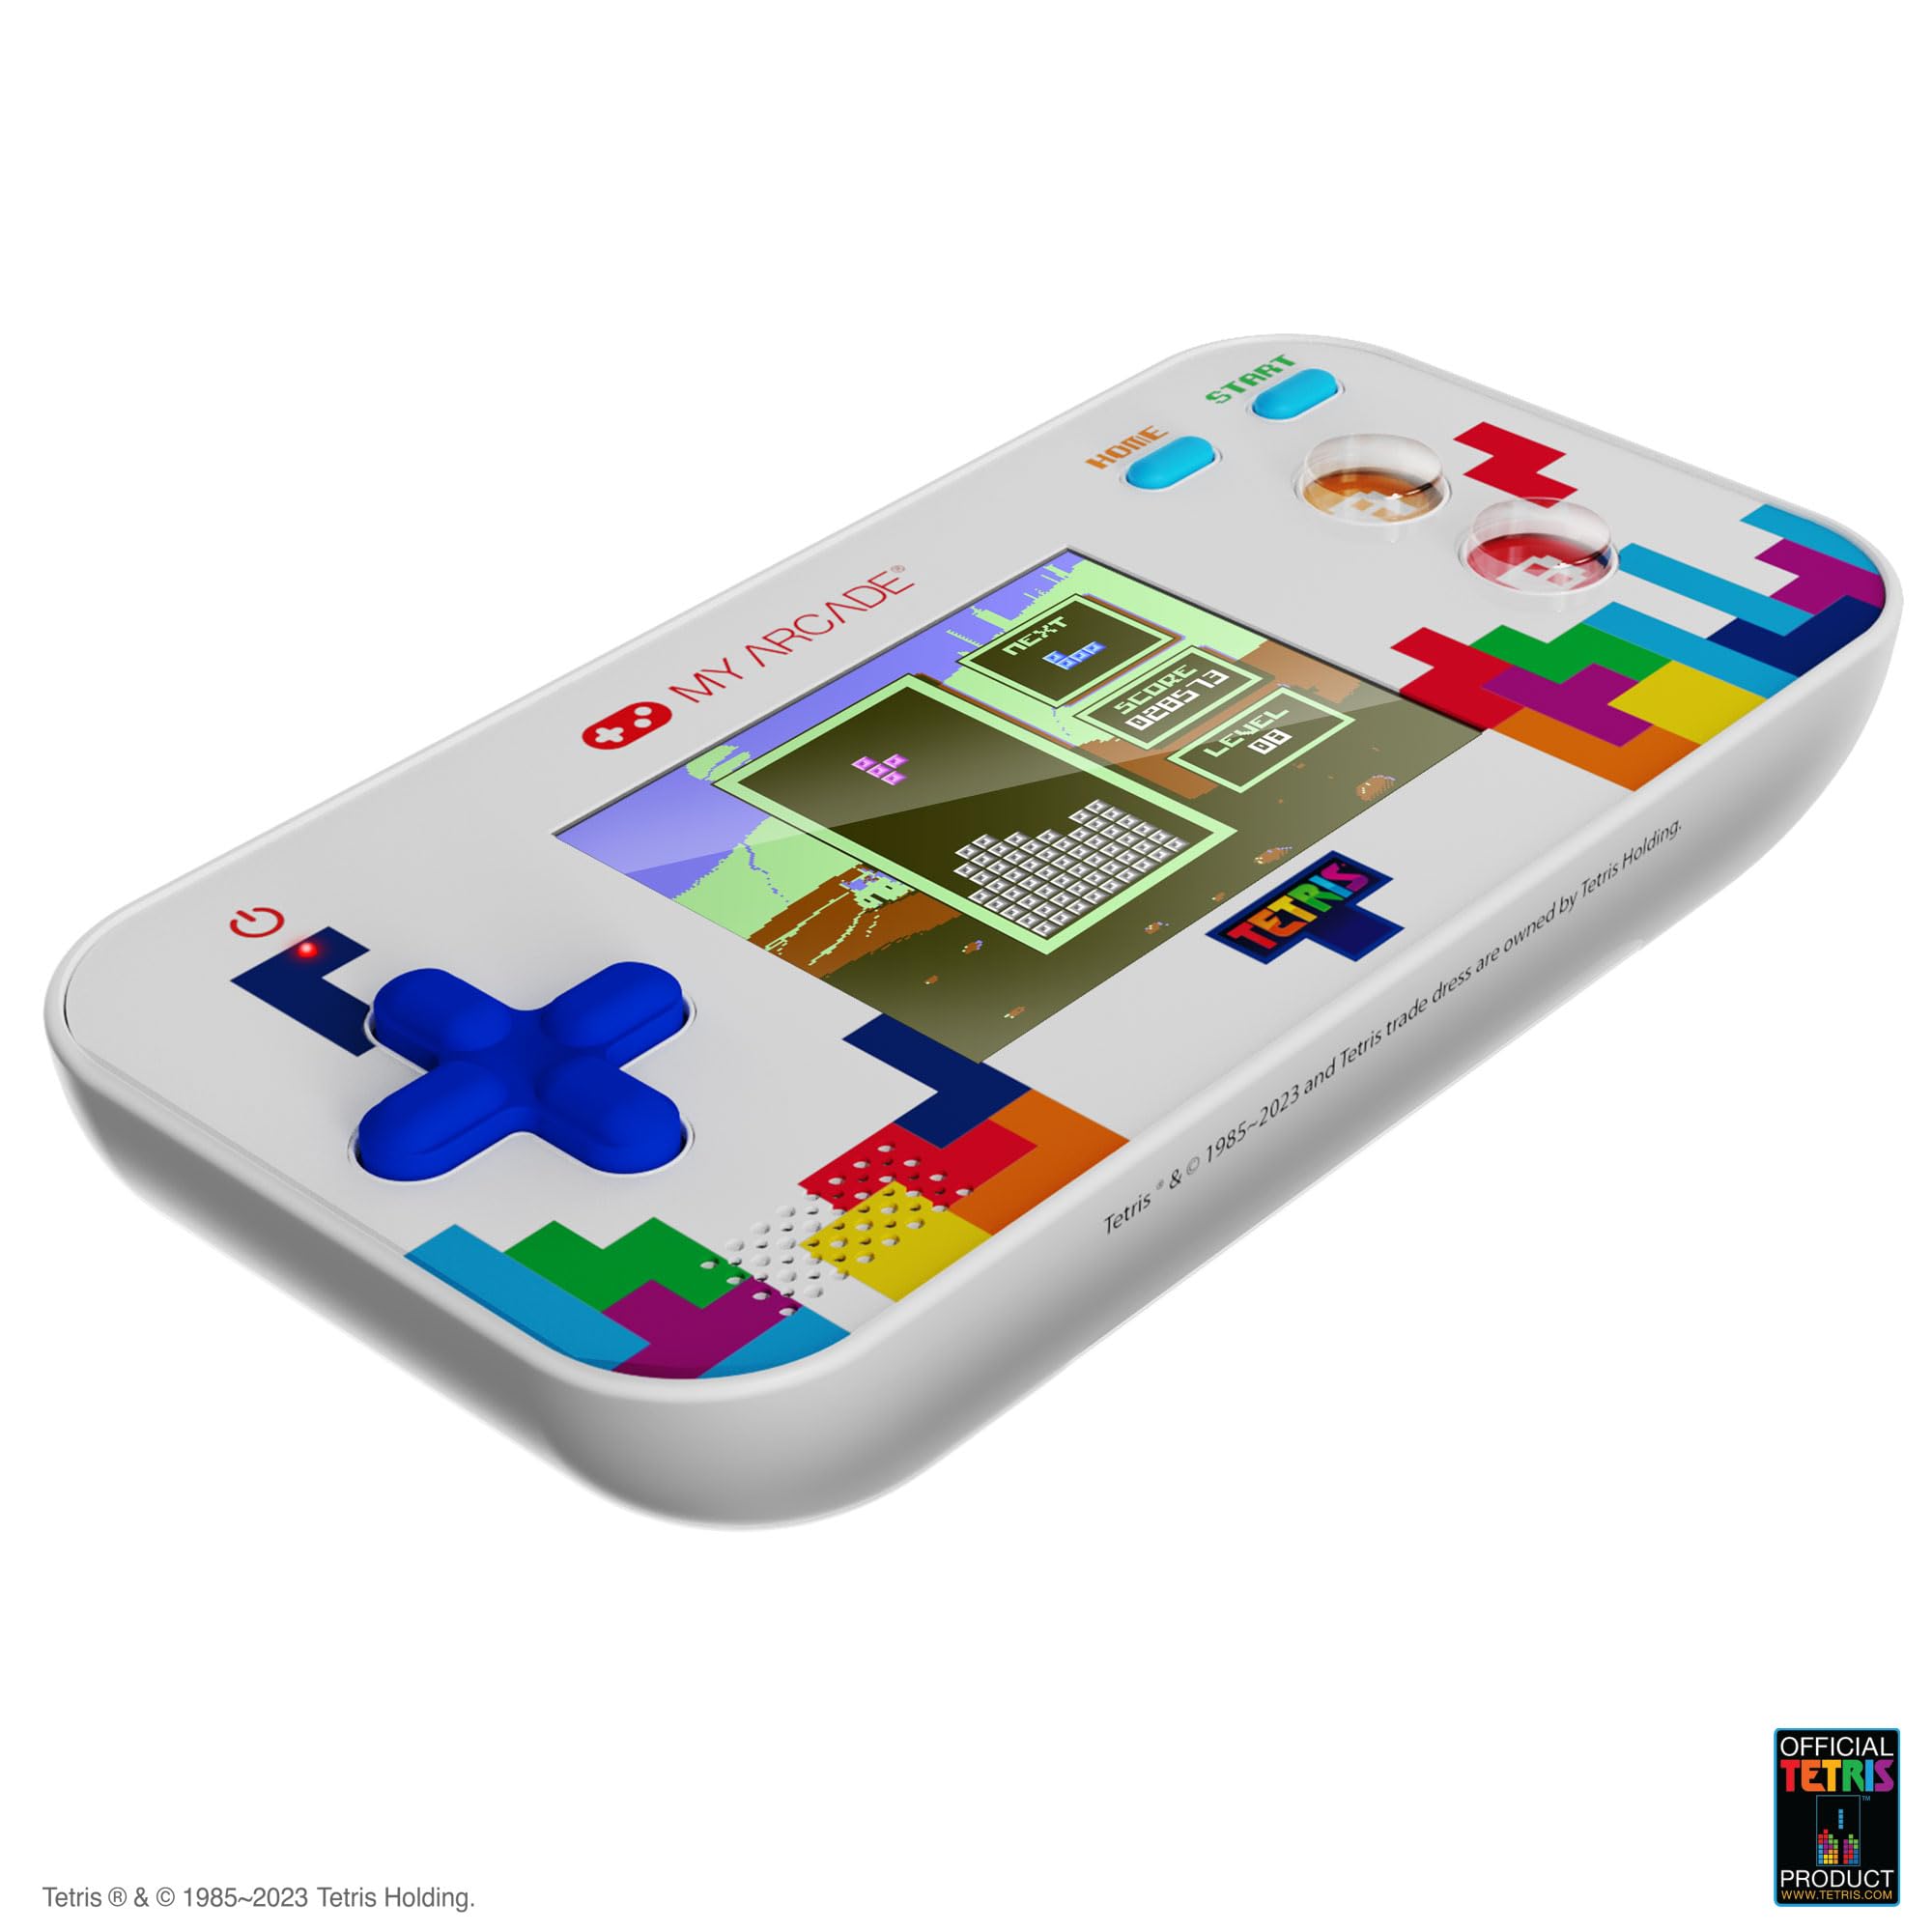 My Arcade Tetris Gamer V: Portable Video Game Sytem with 201 Games, 2.5